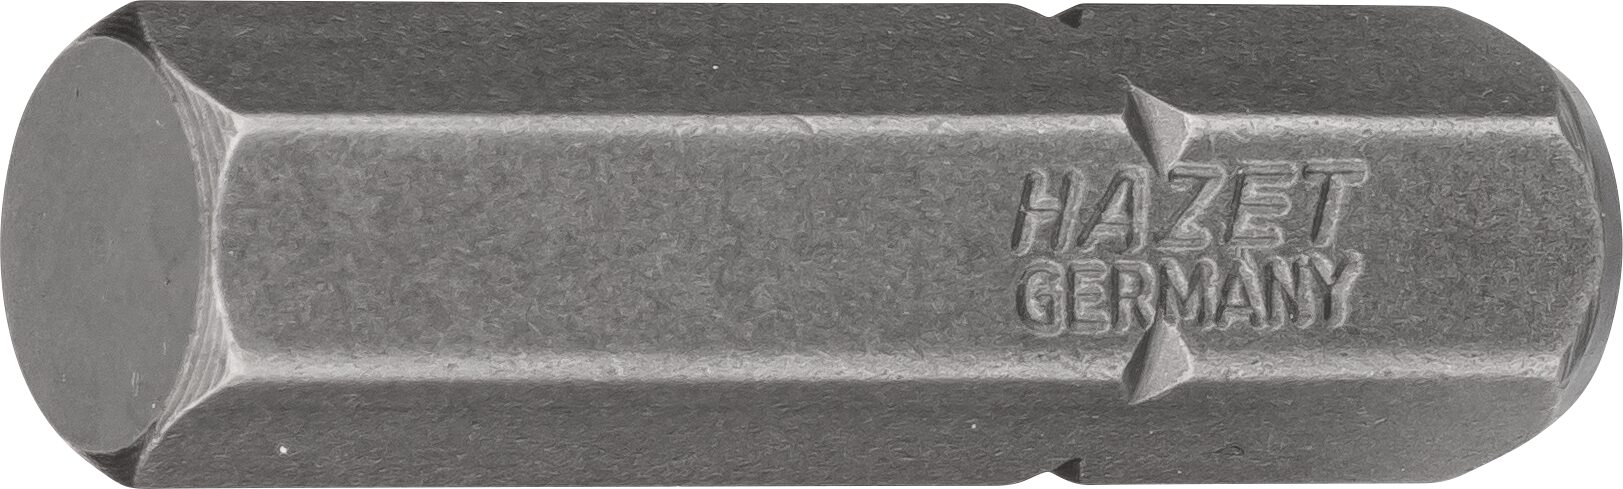 HAZET Bit 2206-8 · Sechskant massiv 8 (5/16 Zoll) · Innen Sechskant Profil · 8 mm